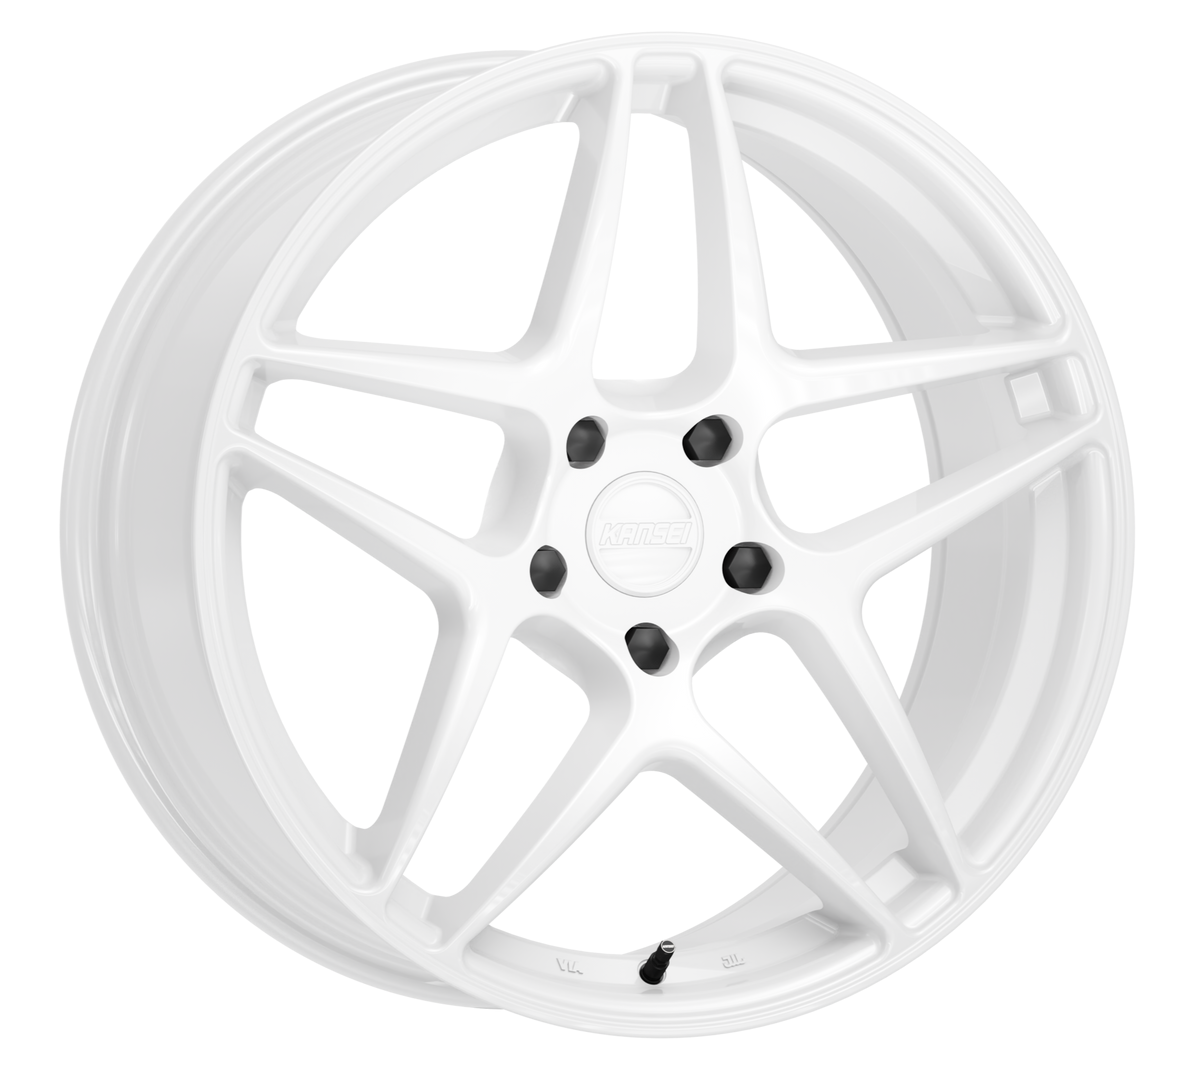 K15W ASTRO Wheel, Size: 18" x 9.50", Bolt Pattern: 5 x 120 mm, Backspace: 6.12" [Finish: Gloss White]